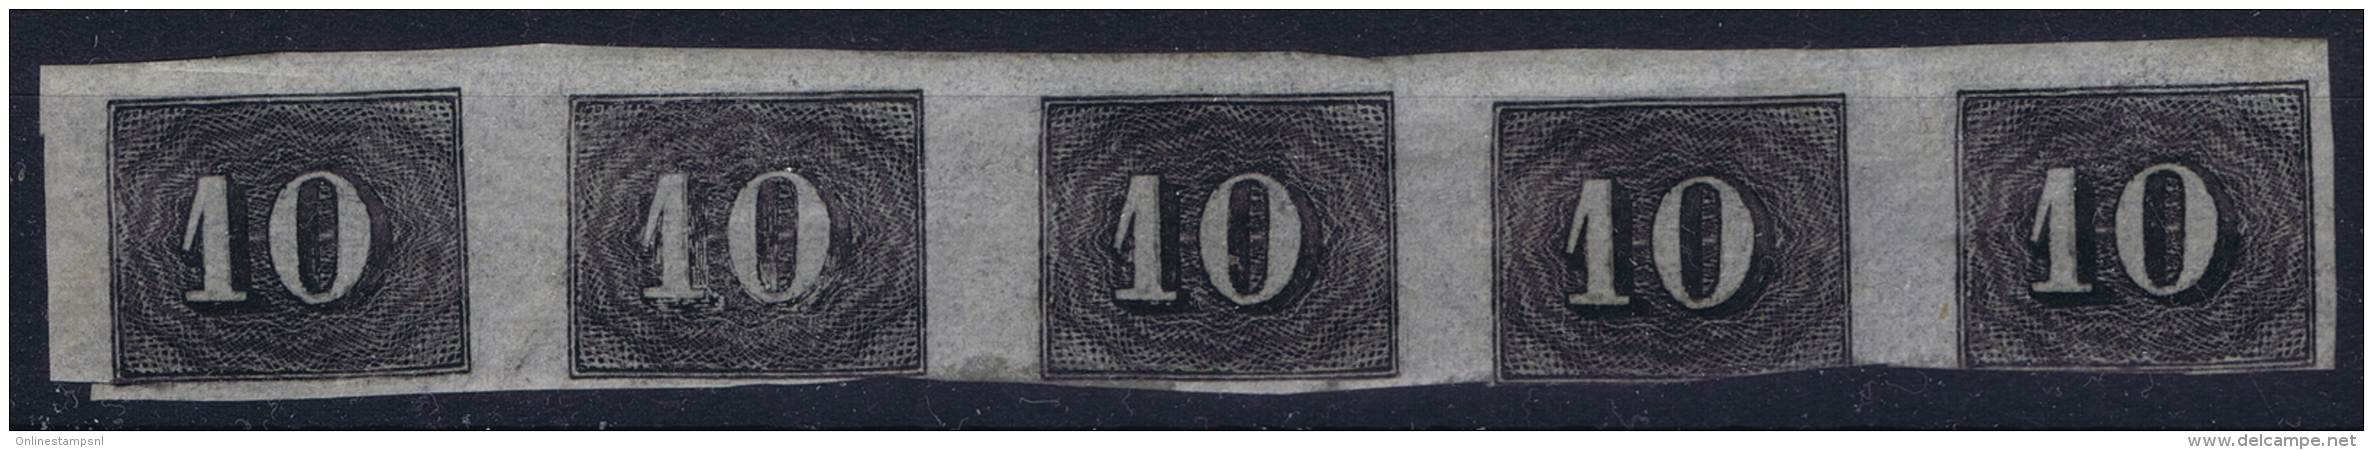 Brasil: 1849 Mi Nr 11 In Strip Of 5 With 2 Hinges At The Back - Unused Stamps